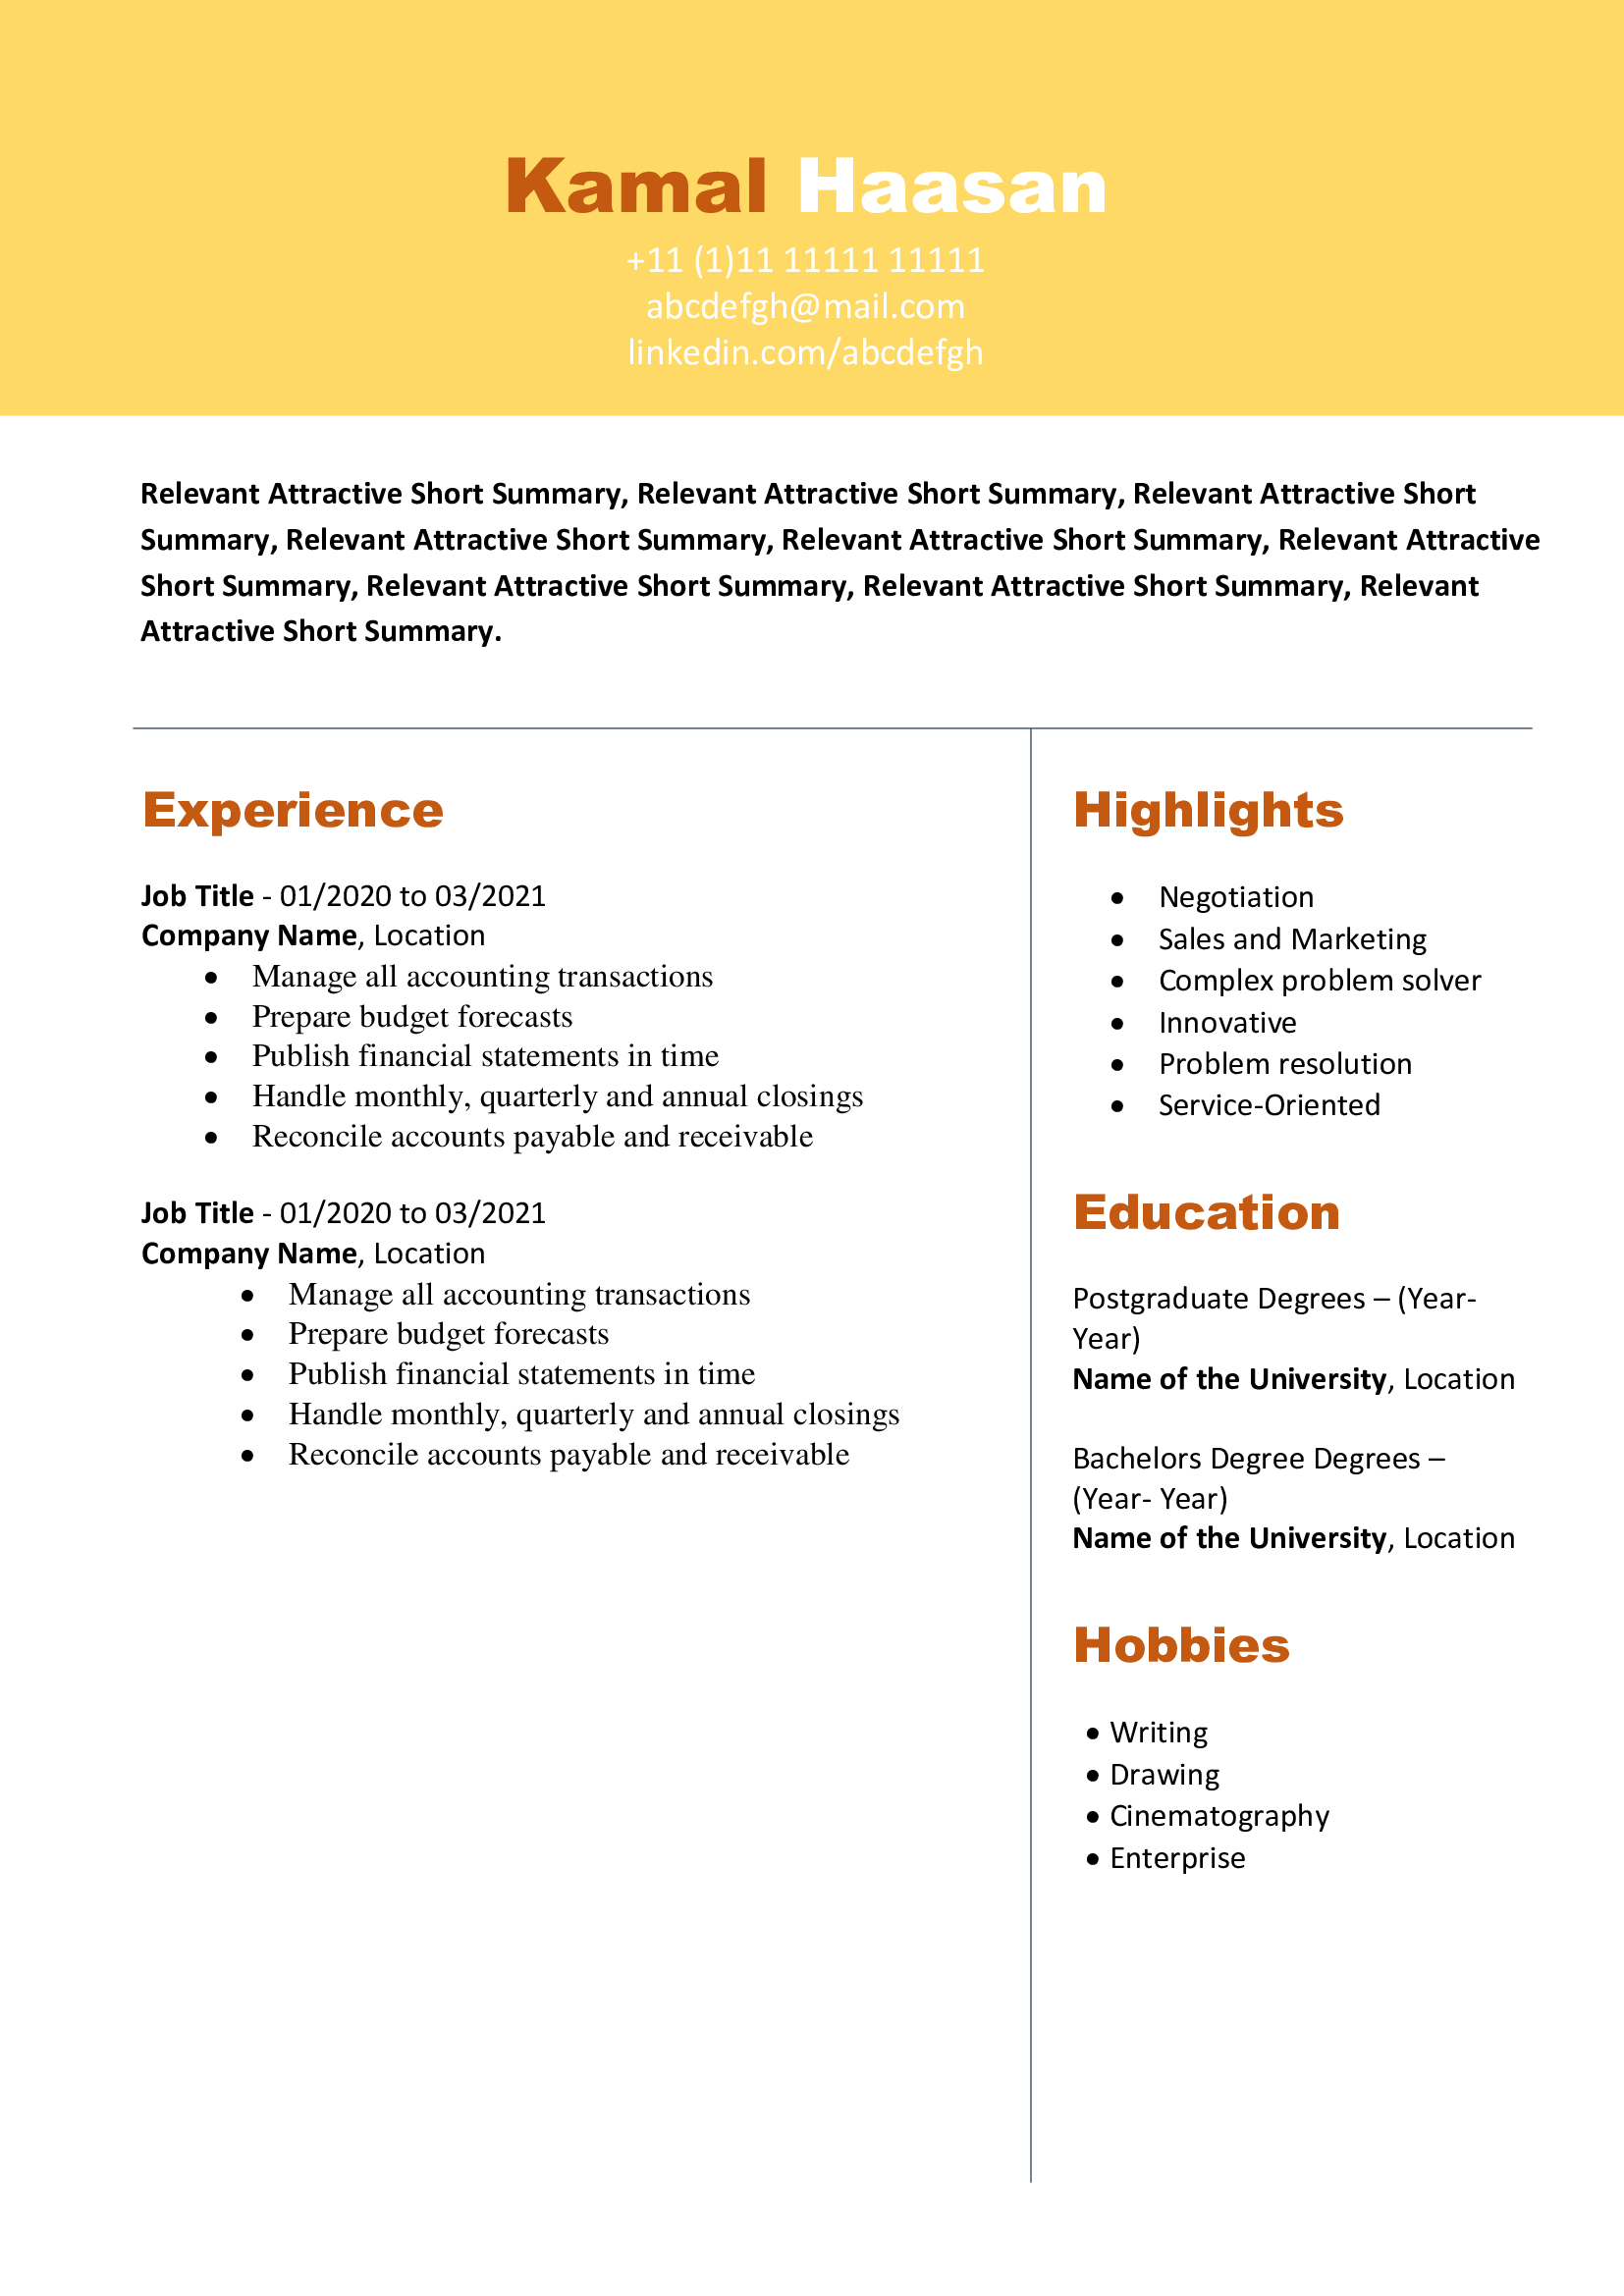 Free Download Professional CV Templates - Editable DOC - Kamal Haasan